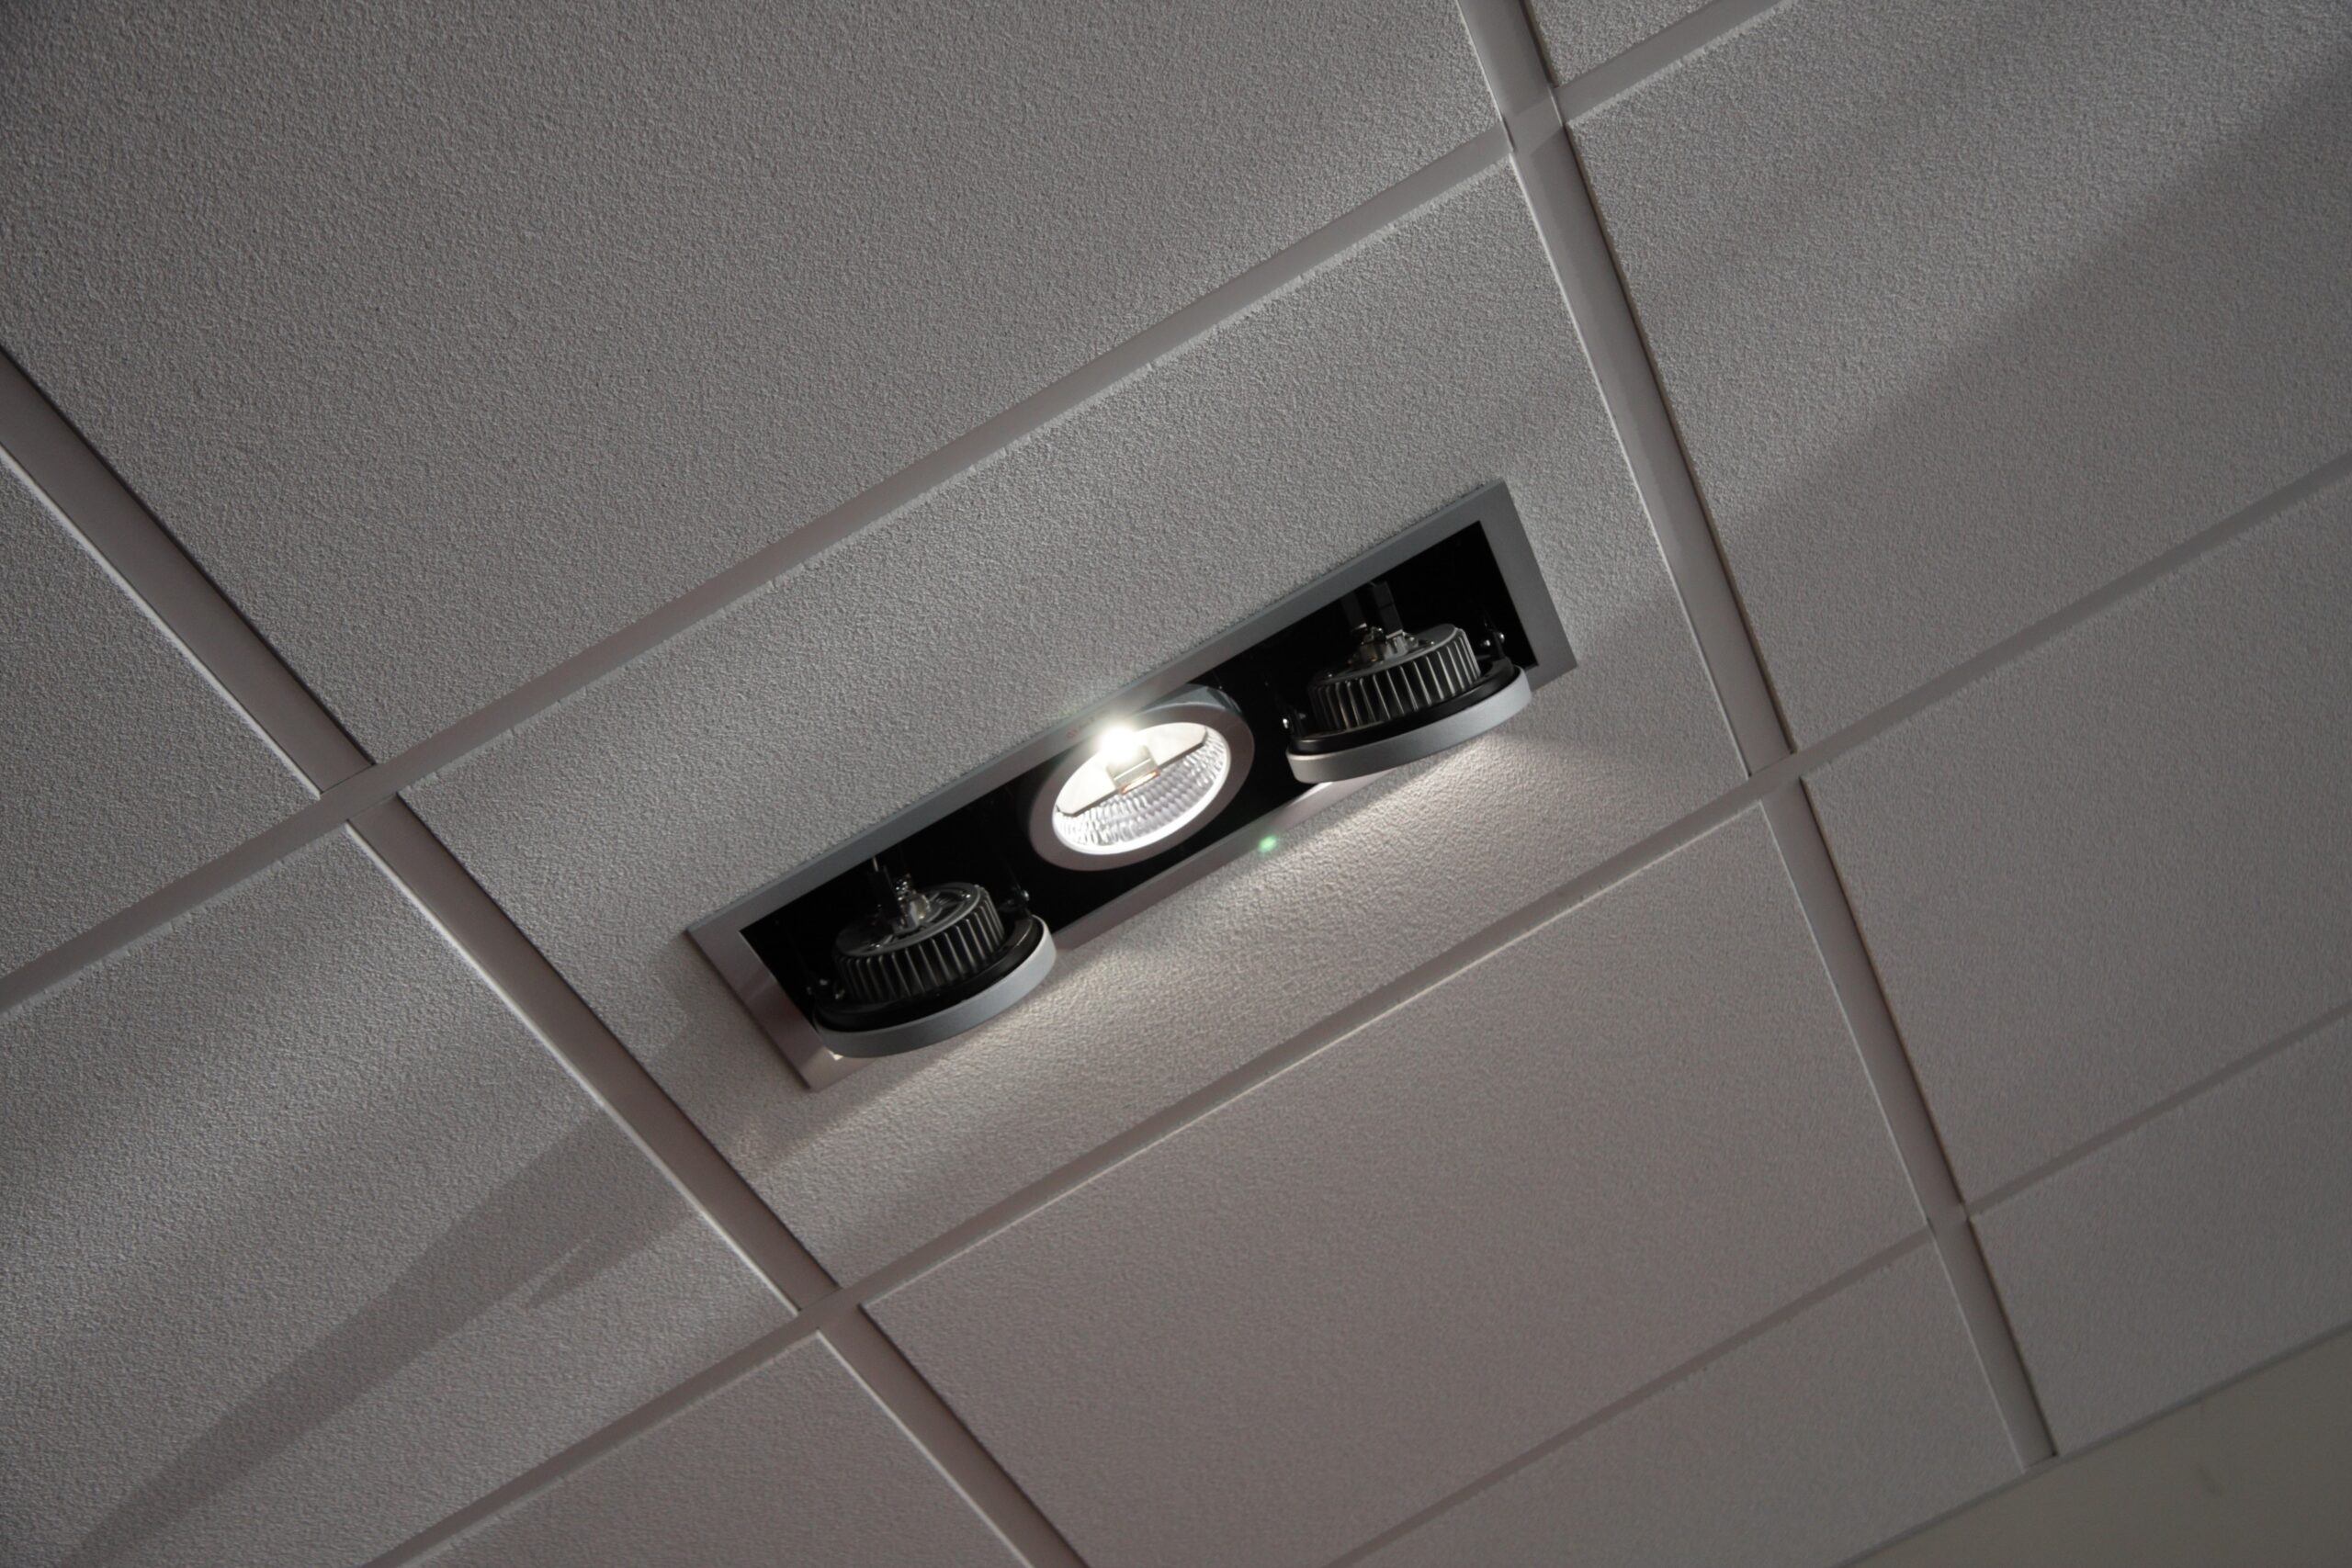 Tamlite Bang & Olufsen downlight ceiling image